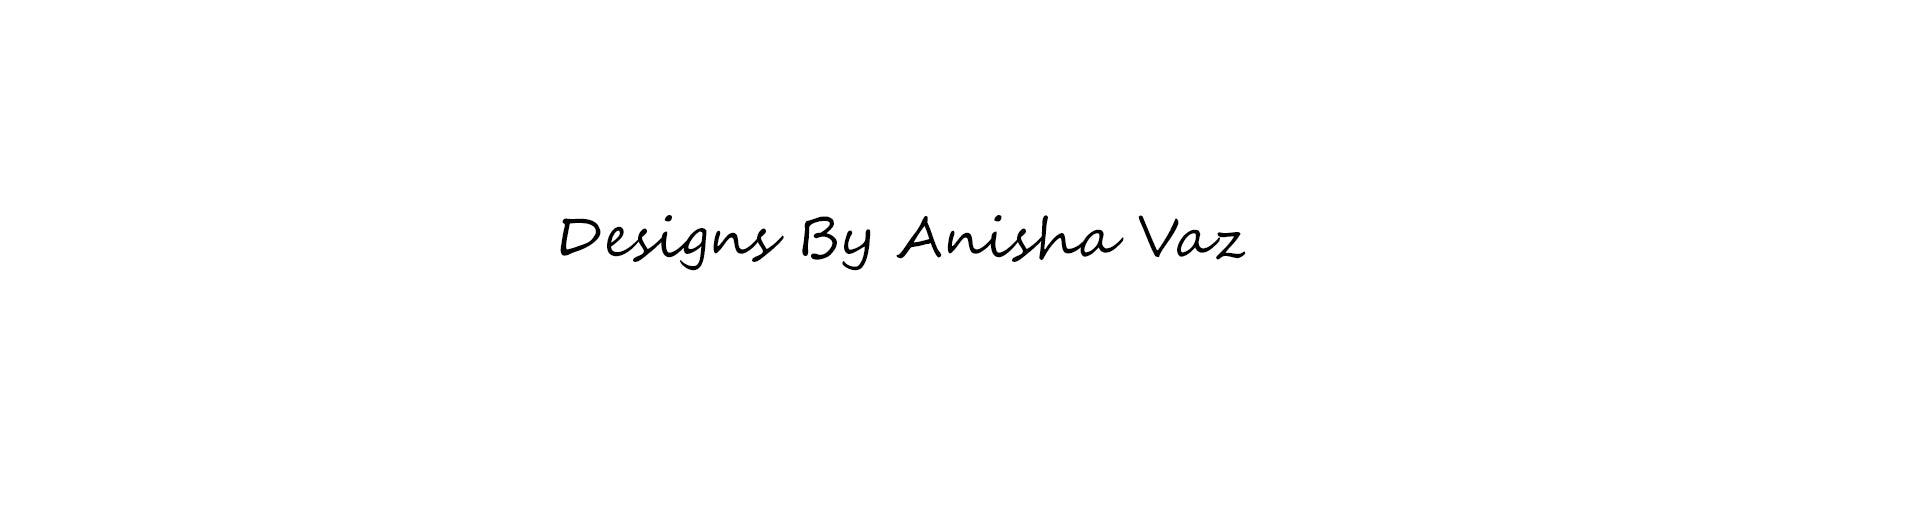 Anisha Vaz